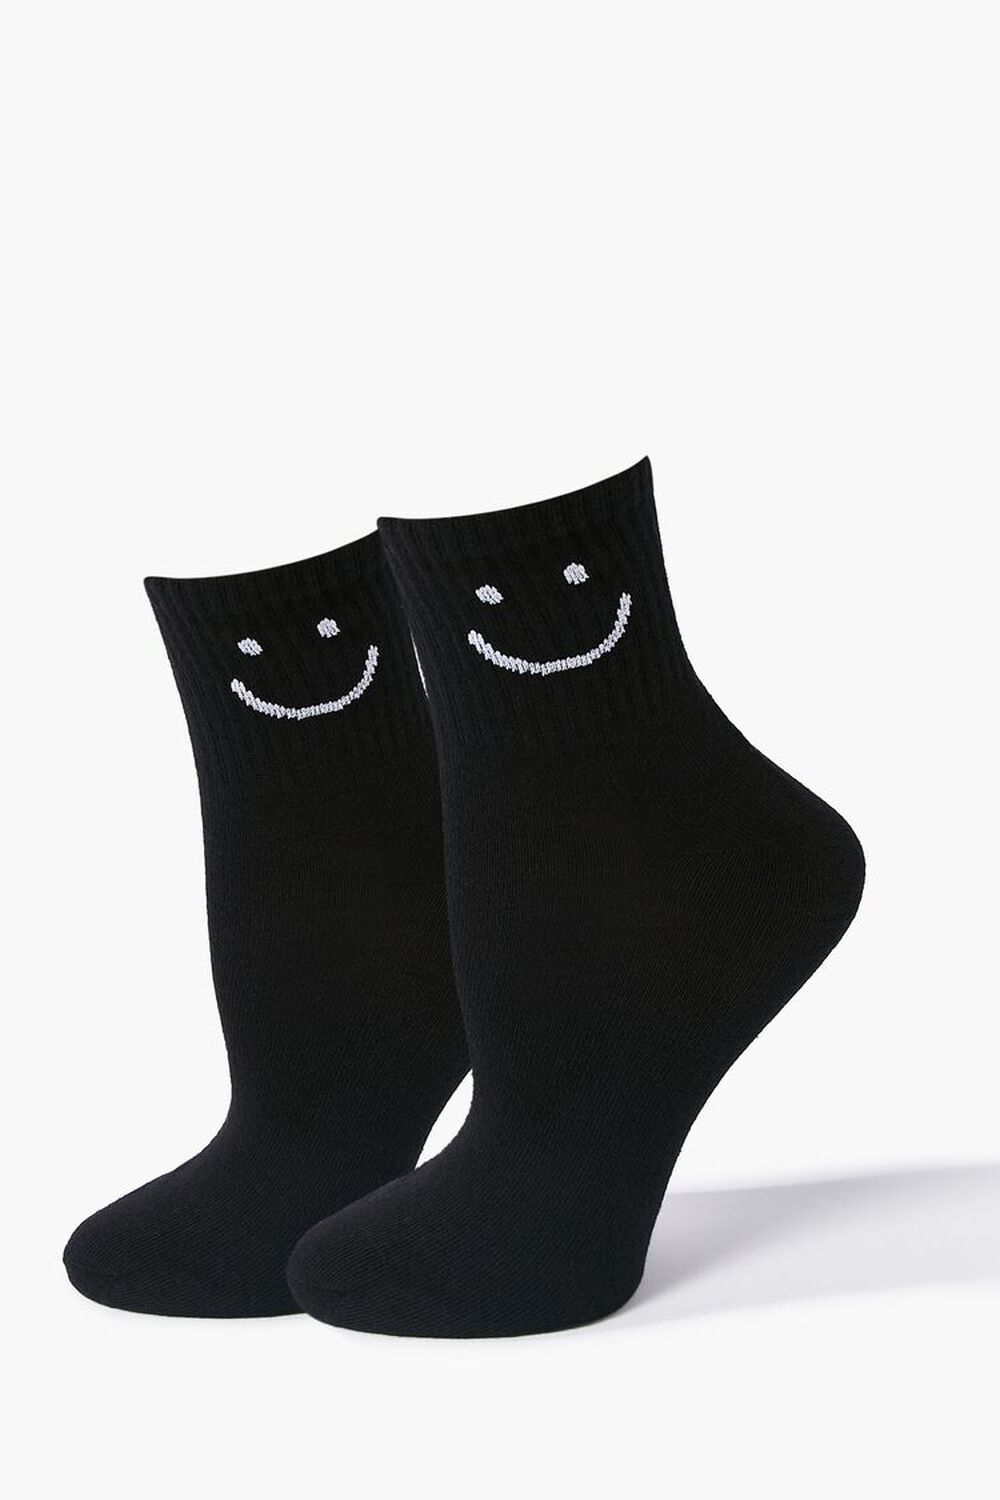 BLACK/WHITE Smiling Graphic Crew Socks, image 1